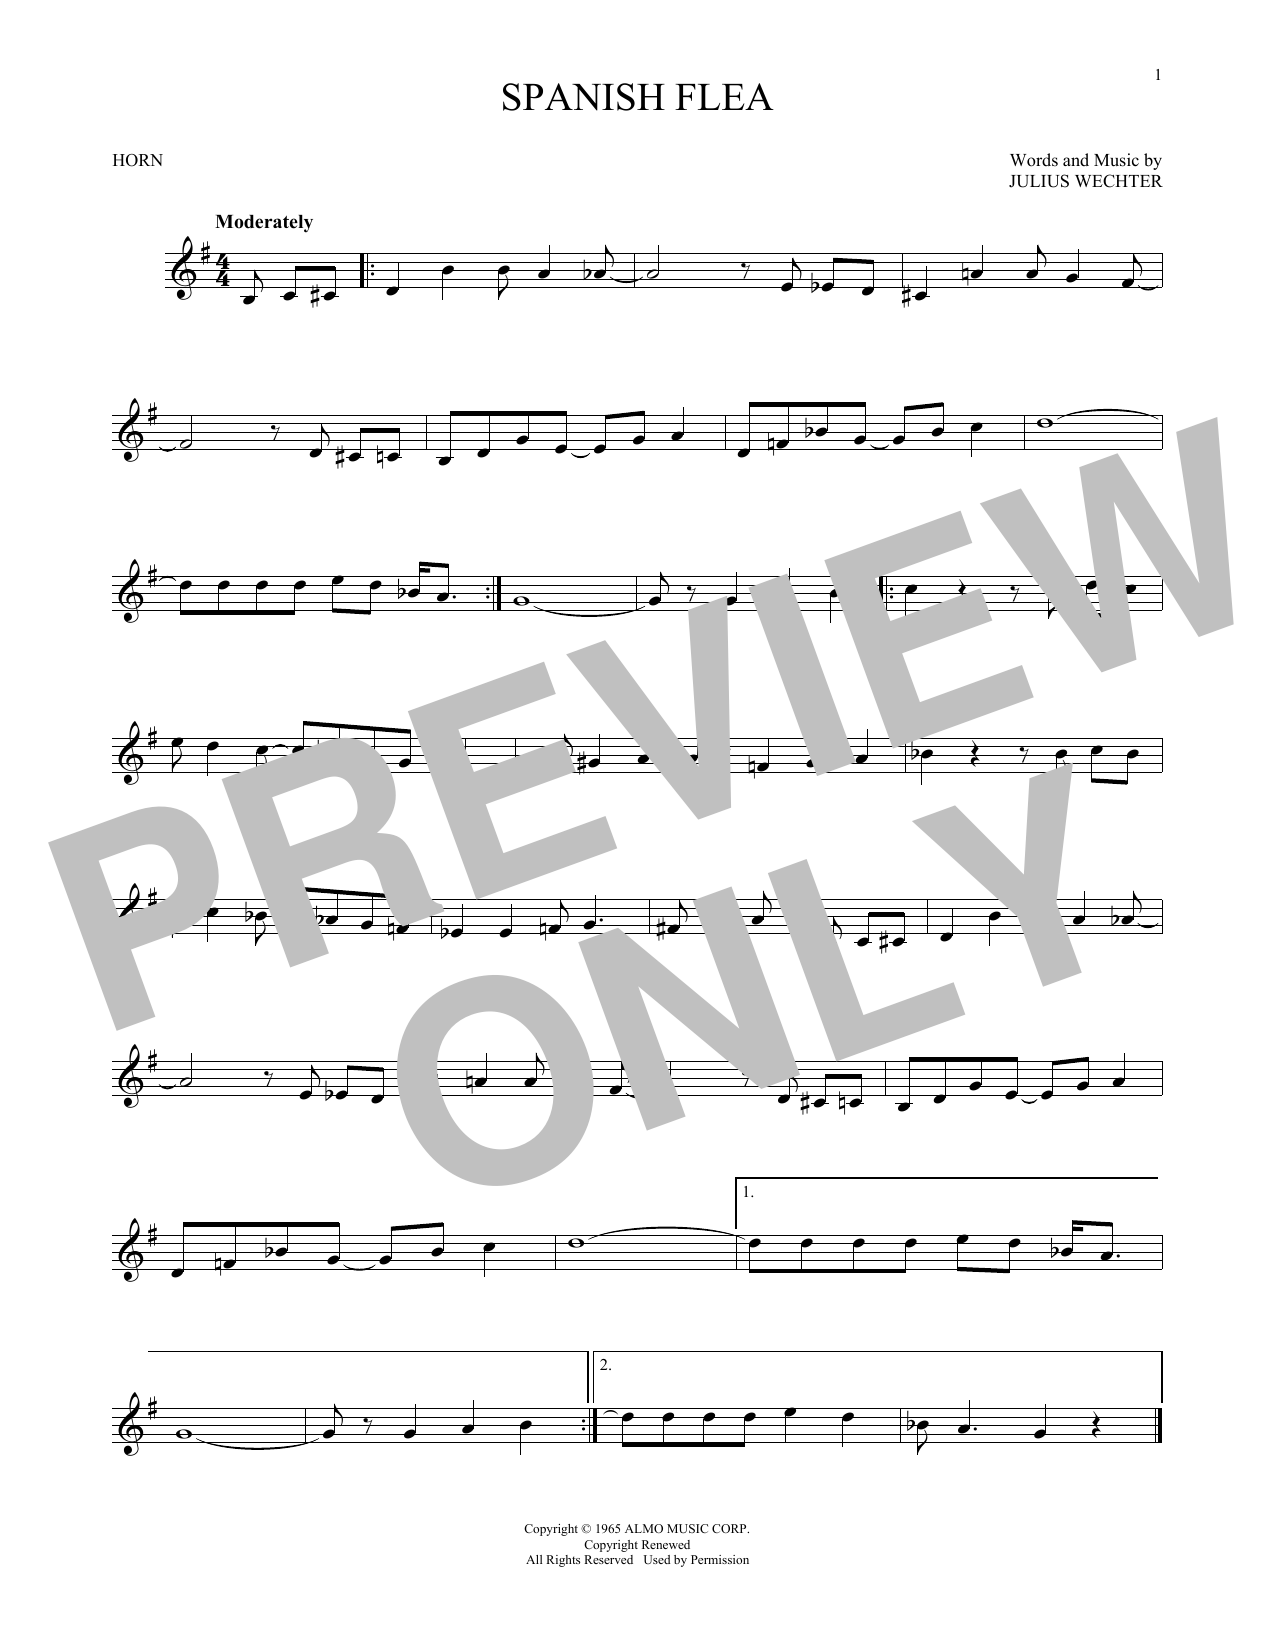 Herb Alpert & The Tijuana Brass Band Spanish Flea Sheet Music Notes & Chords for Tenor Saxophone - Download or Print PDF